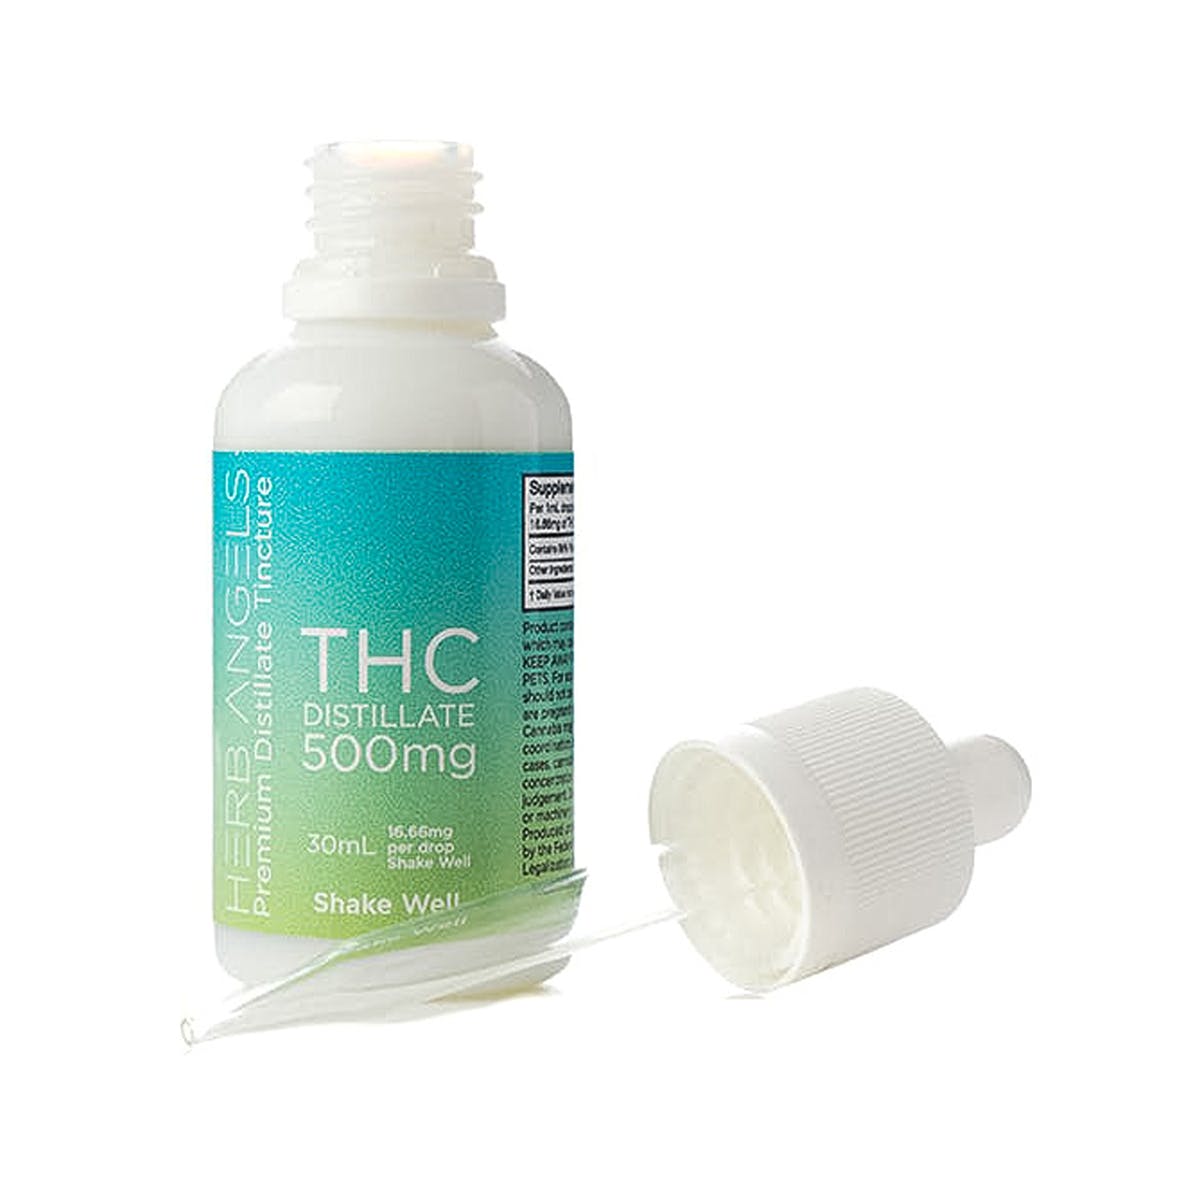 THC Distillate Tincture 500mg